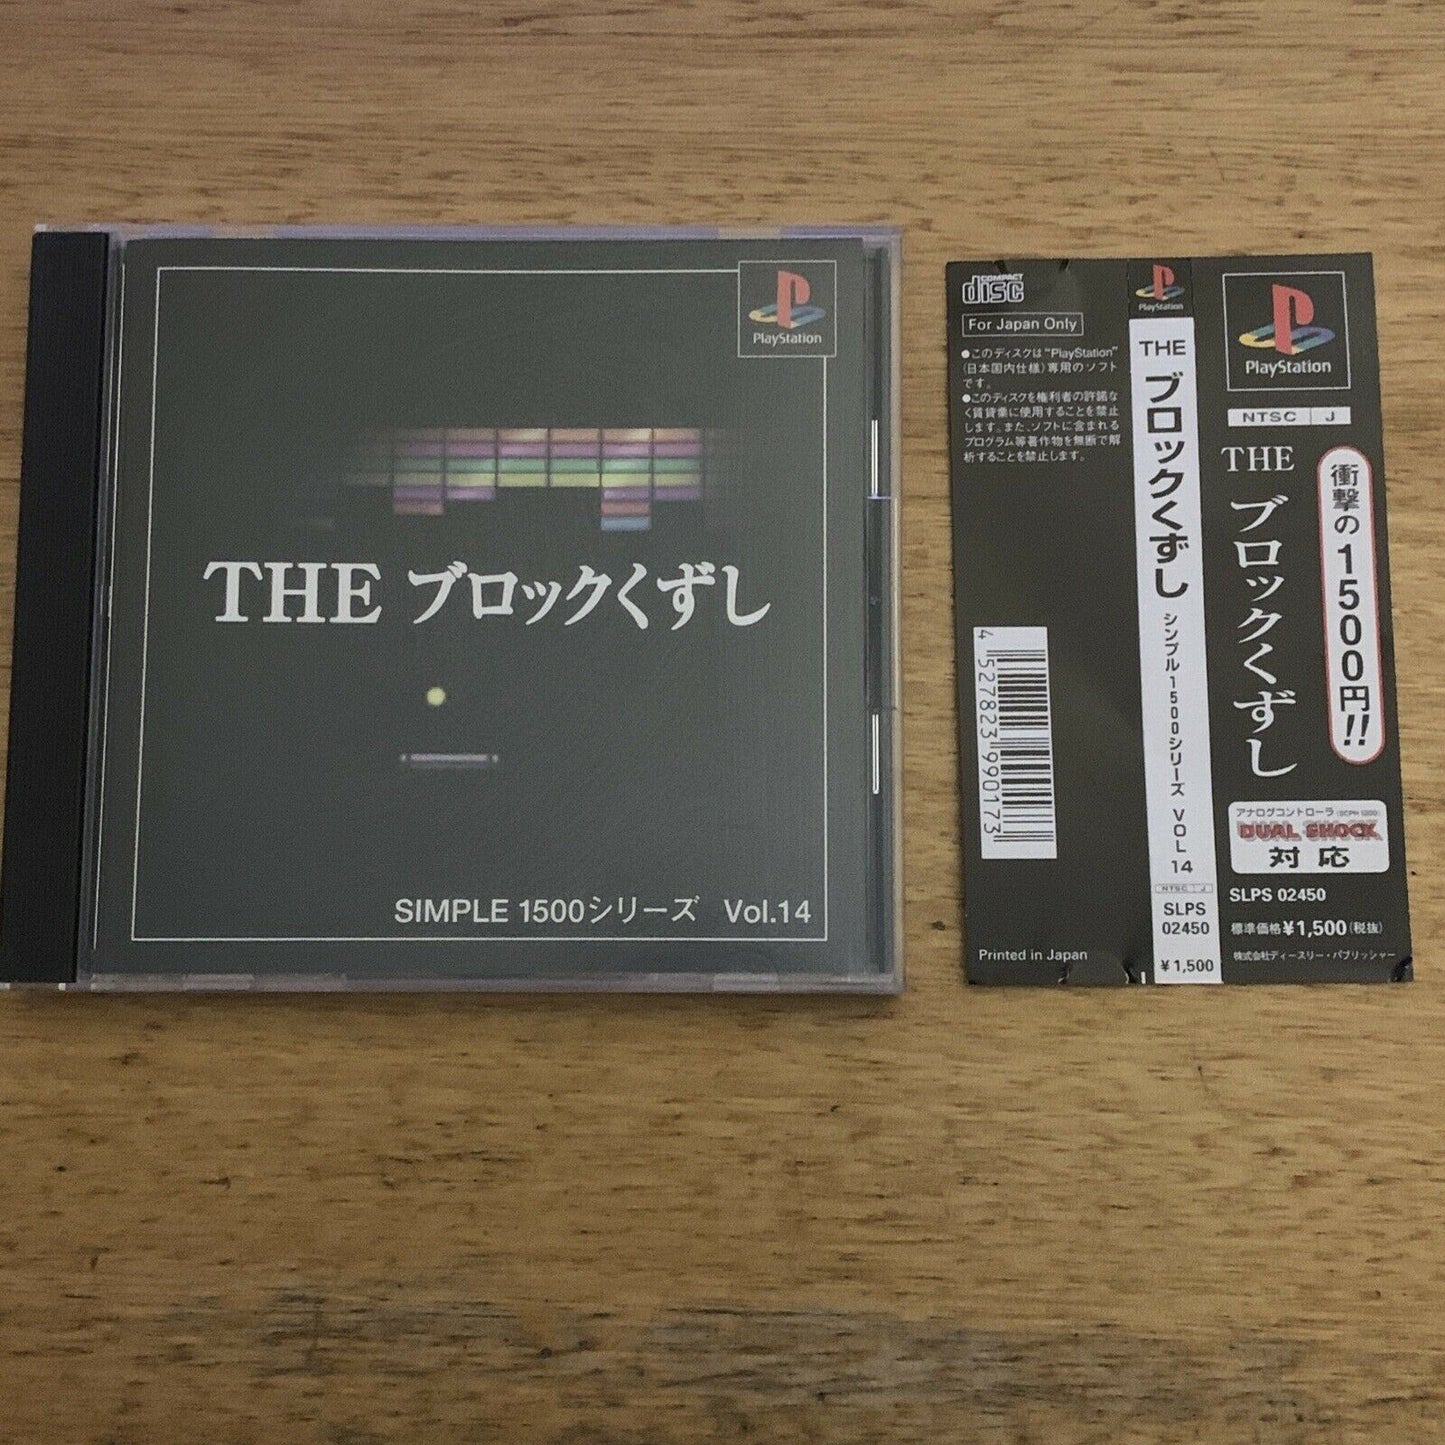 The Block Kuzushi - Playstation PS1 NTSC-J Japan Arcade Breakout Game